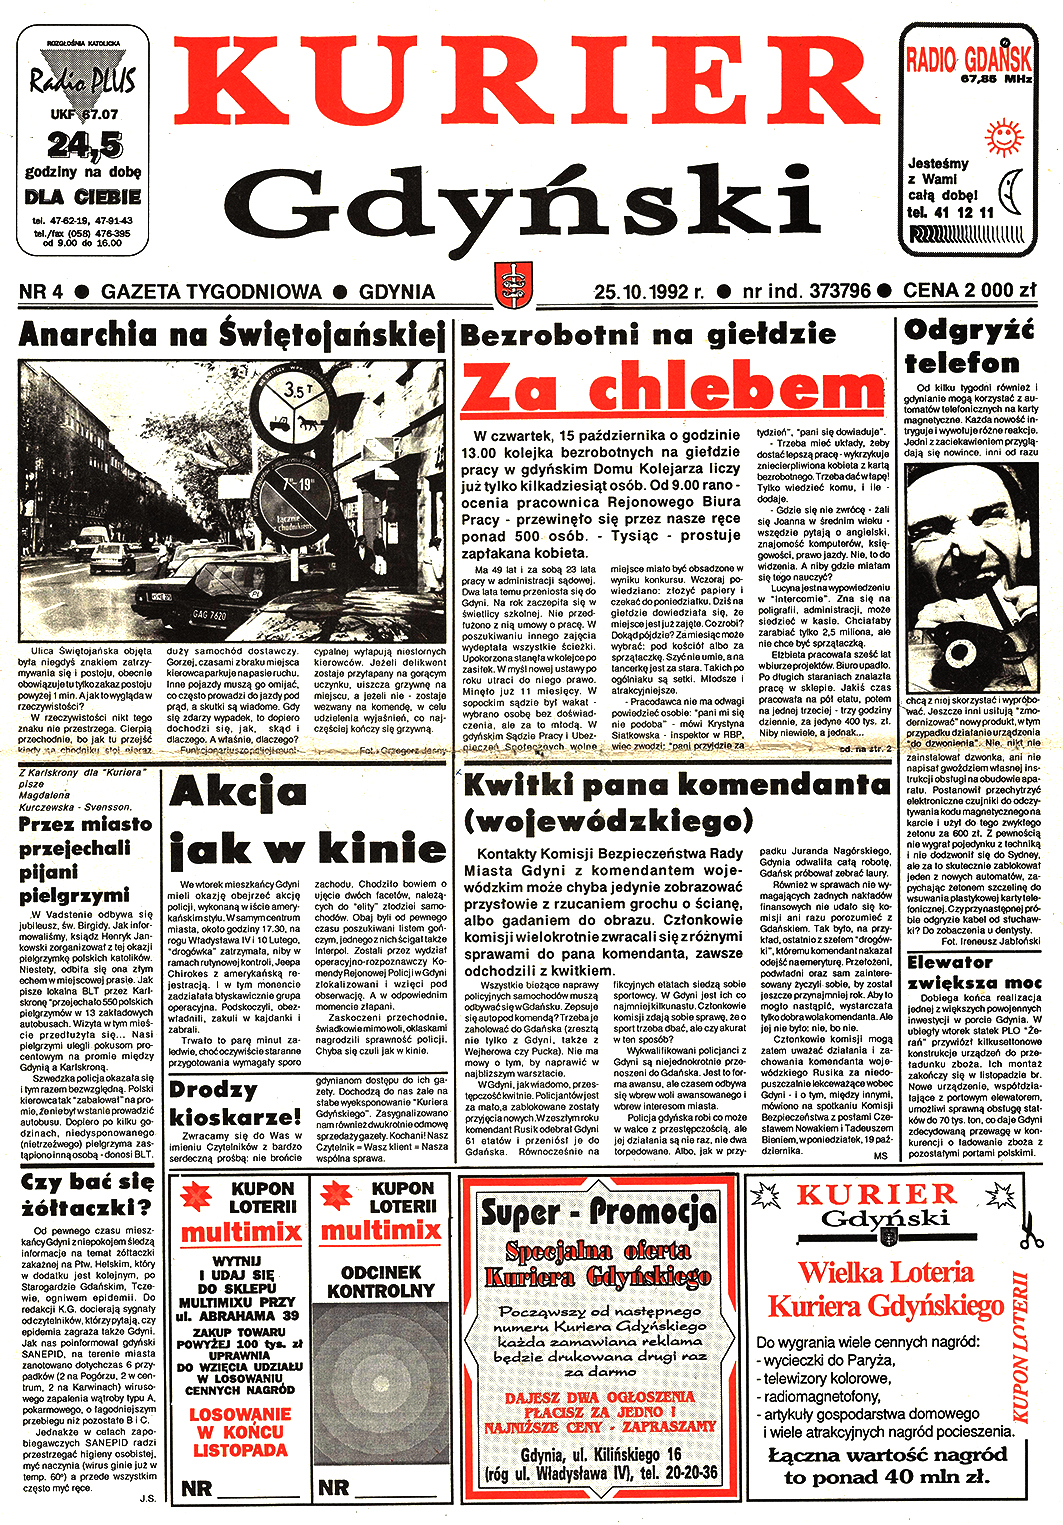 Kurier Gdyński. - 1992, nr 4